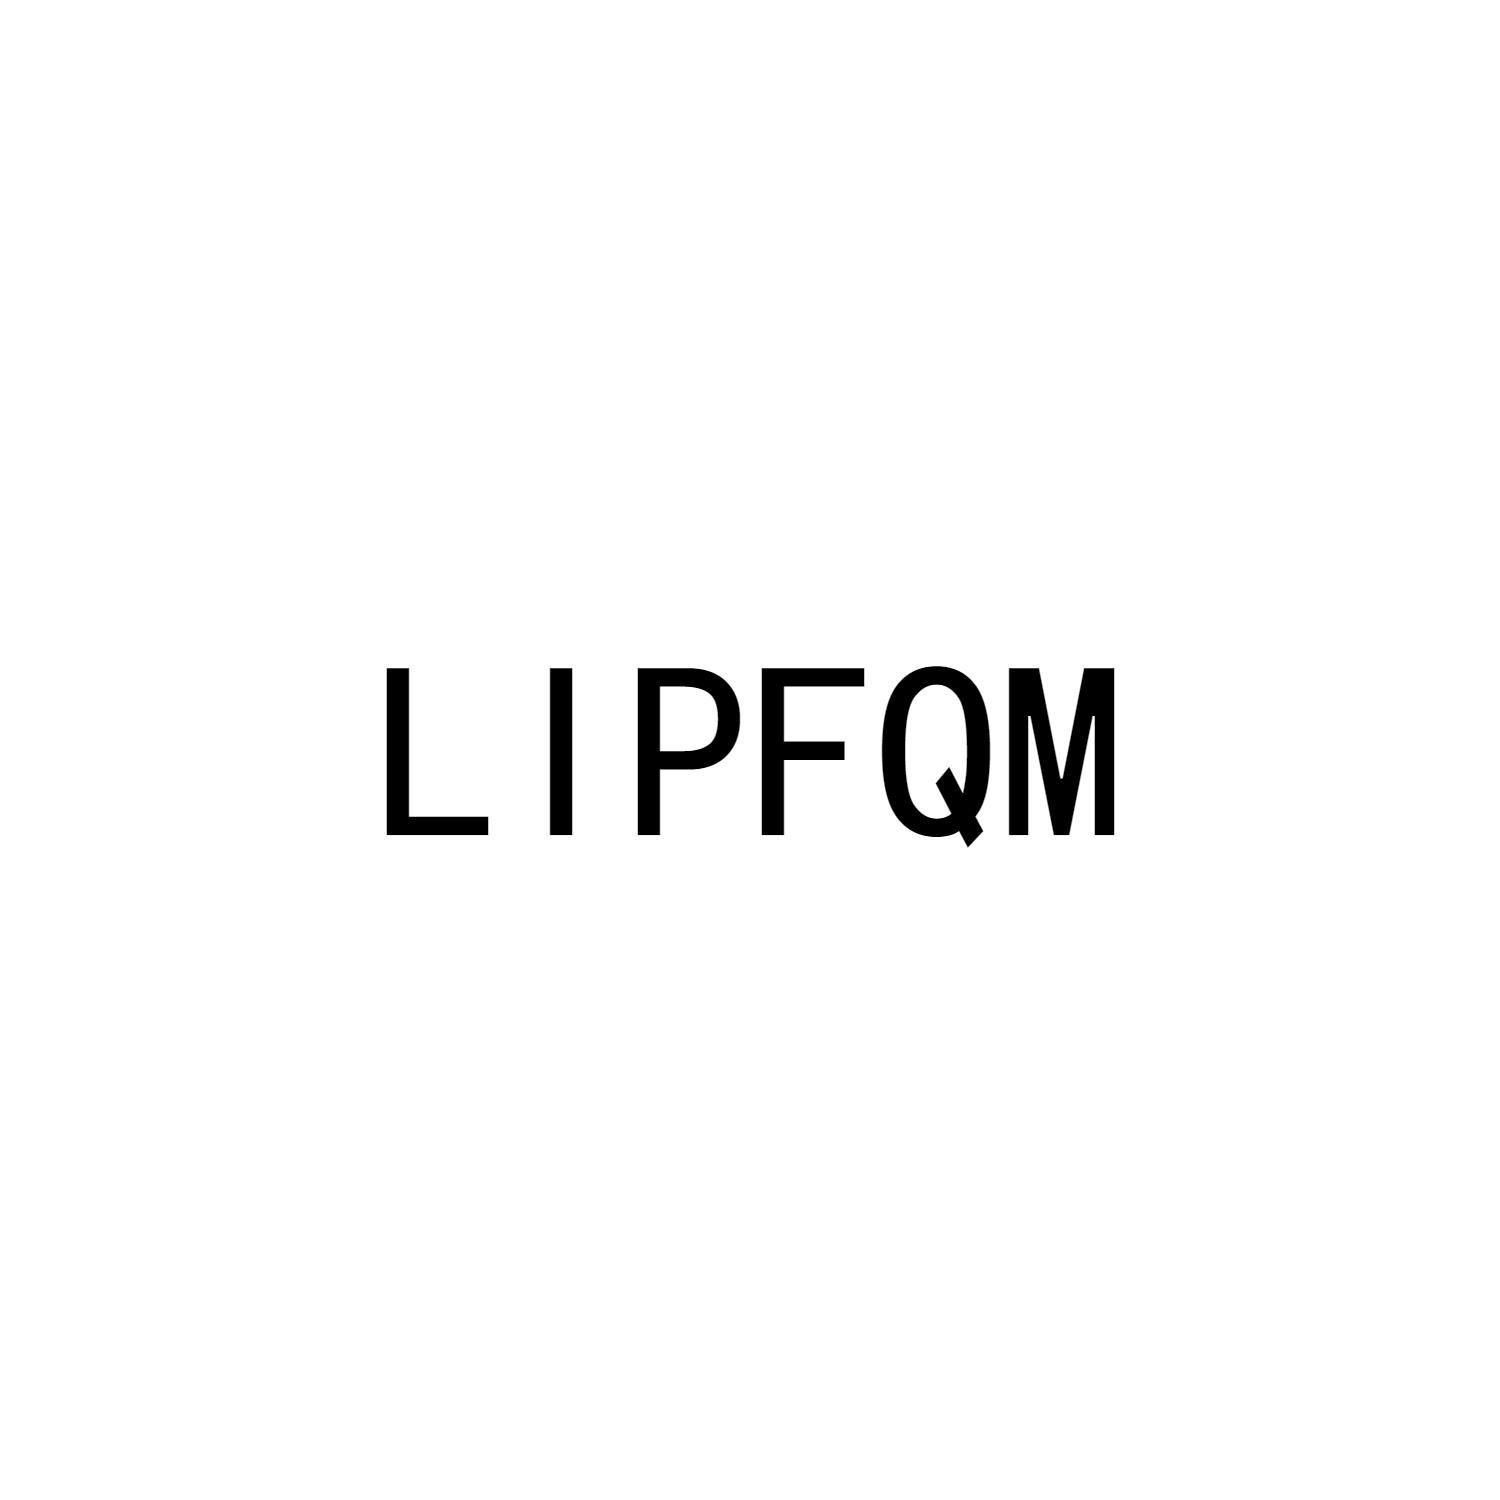 LIPFQM